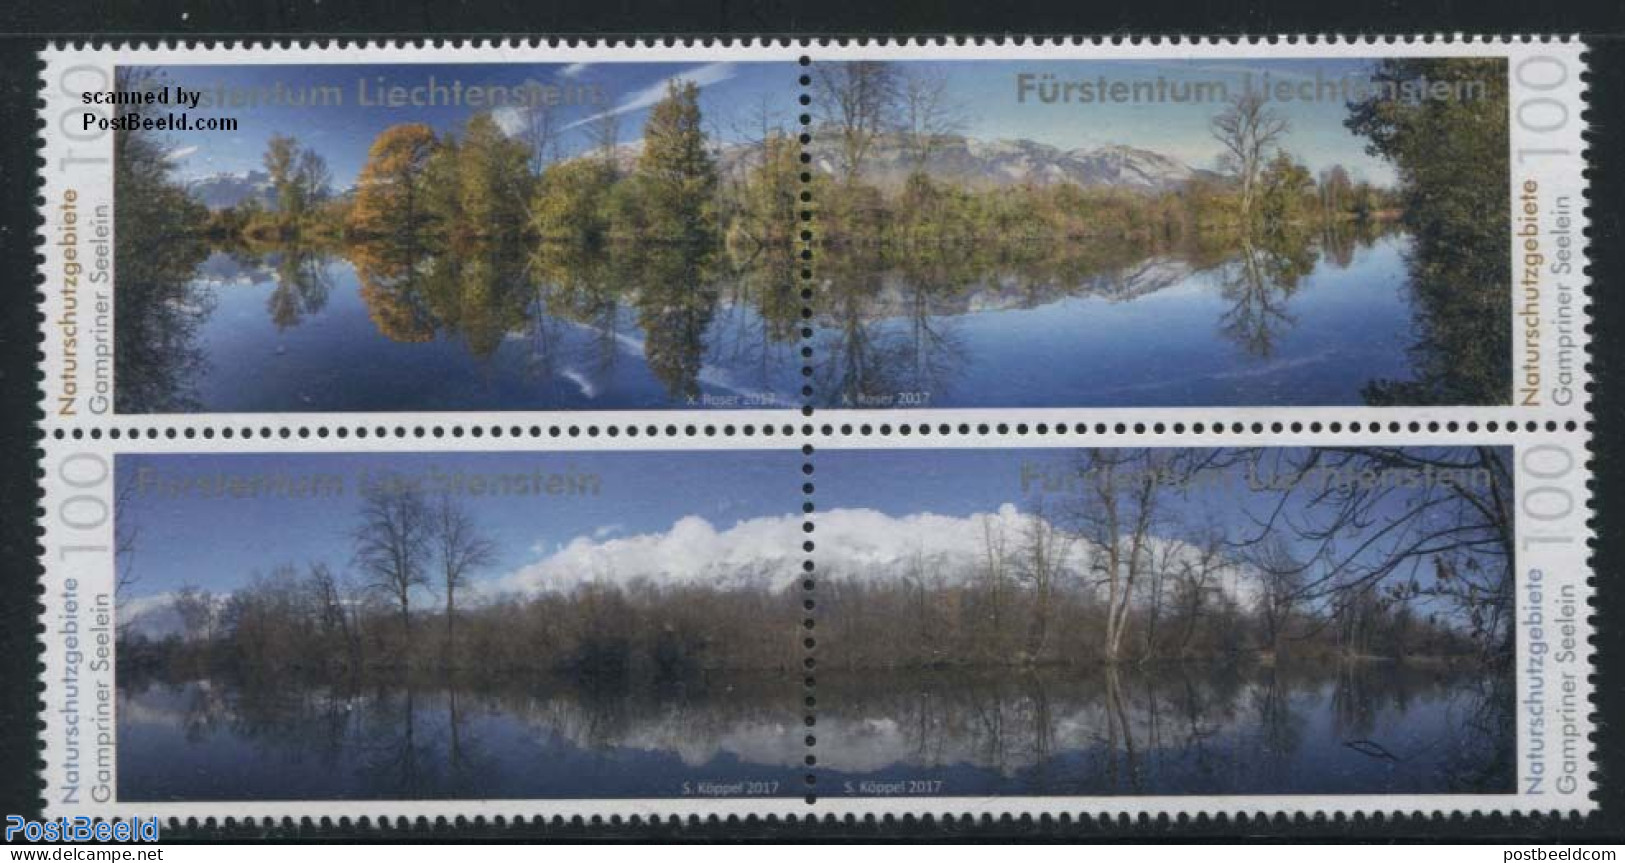 Liechtenstein 2017 Gampriner Lake 4v [+], Mint NH, Nature - National Parks - Water, Dams & Falls - Ungebraucht